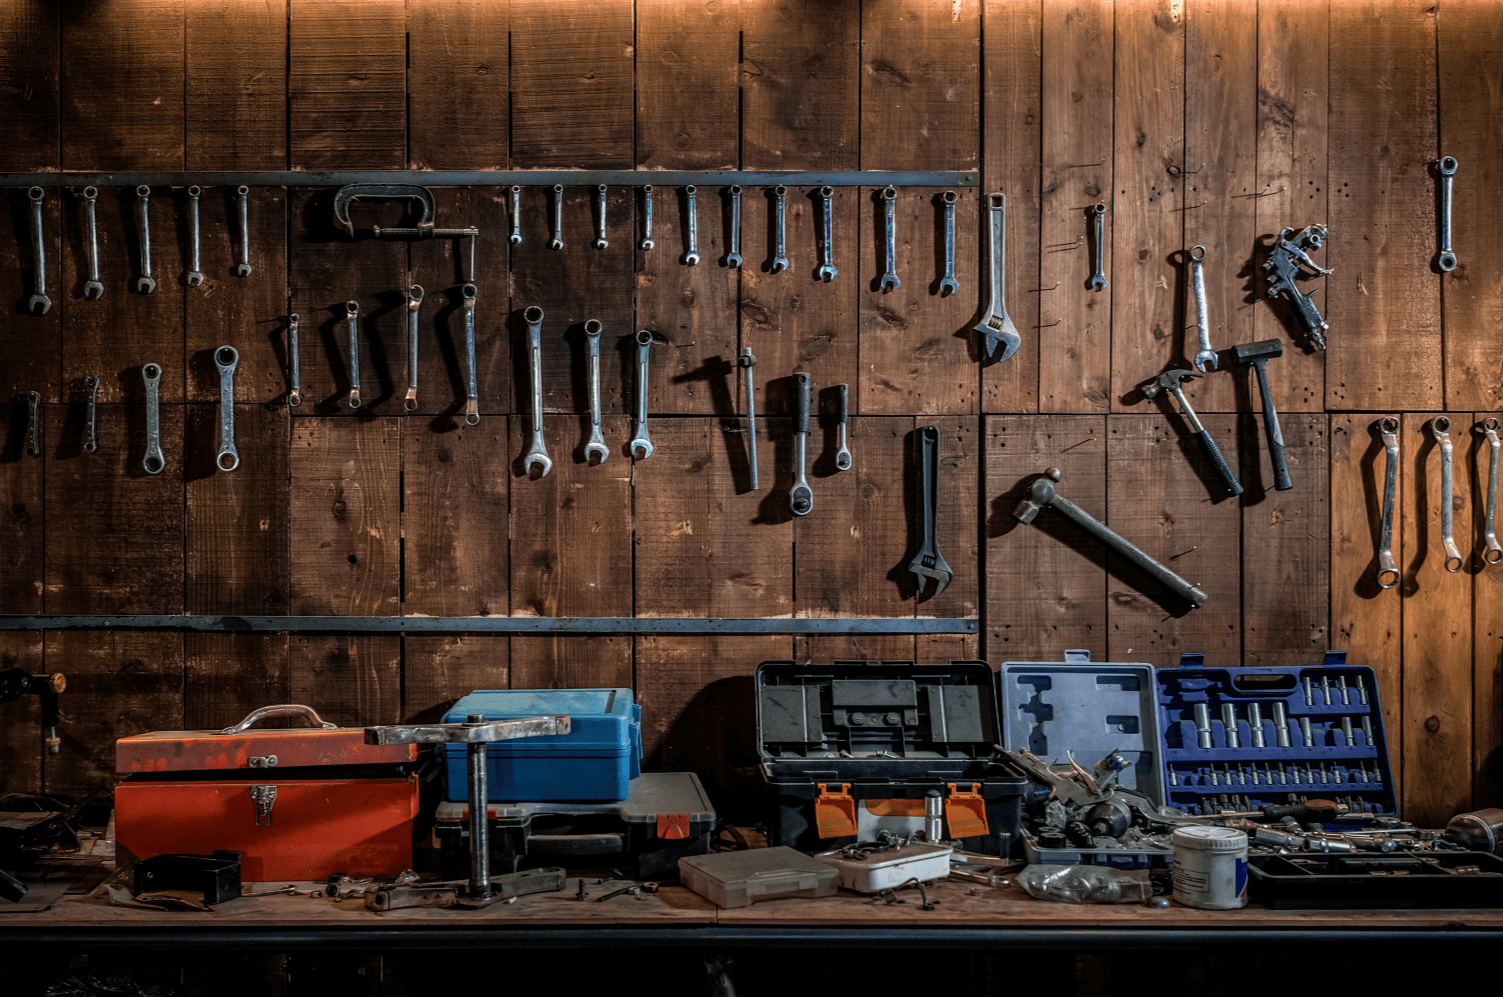 Katebackdrop£ºKate Tool shelf against a table vintage garage backdrop for boy/Father's Day